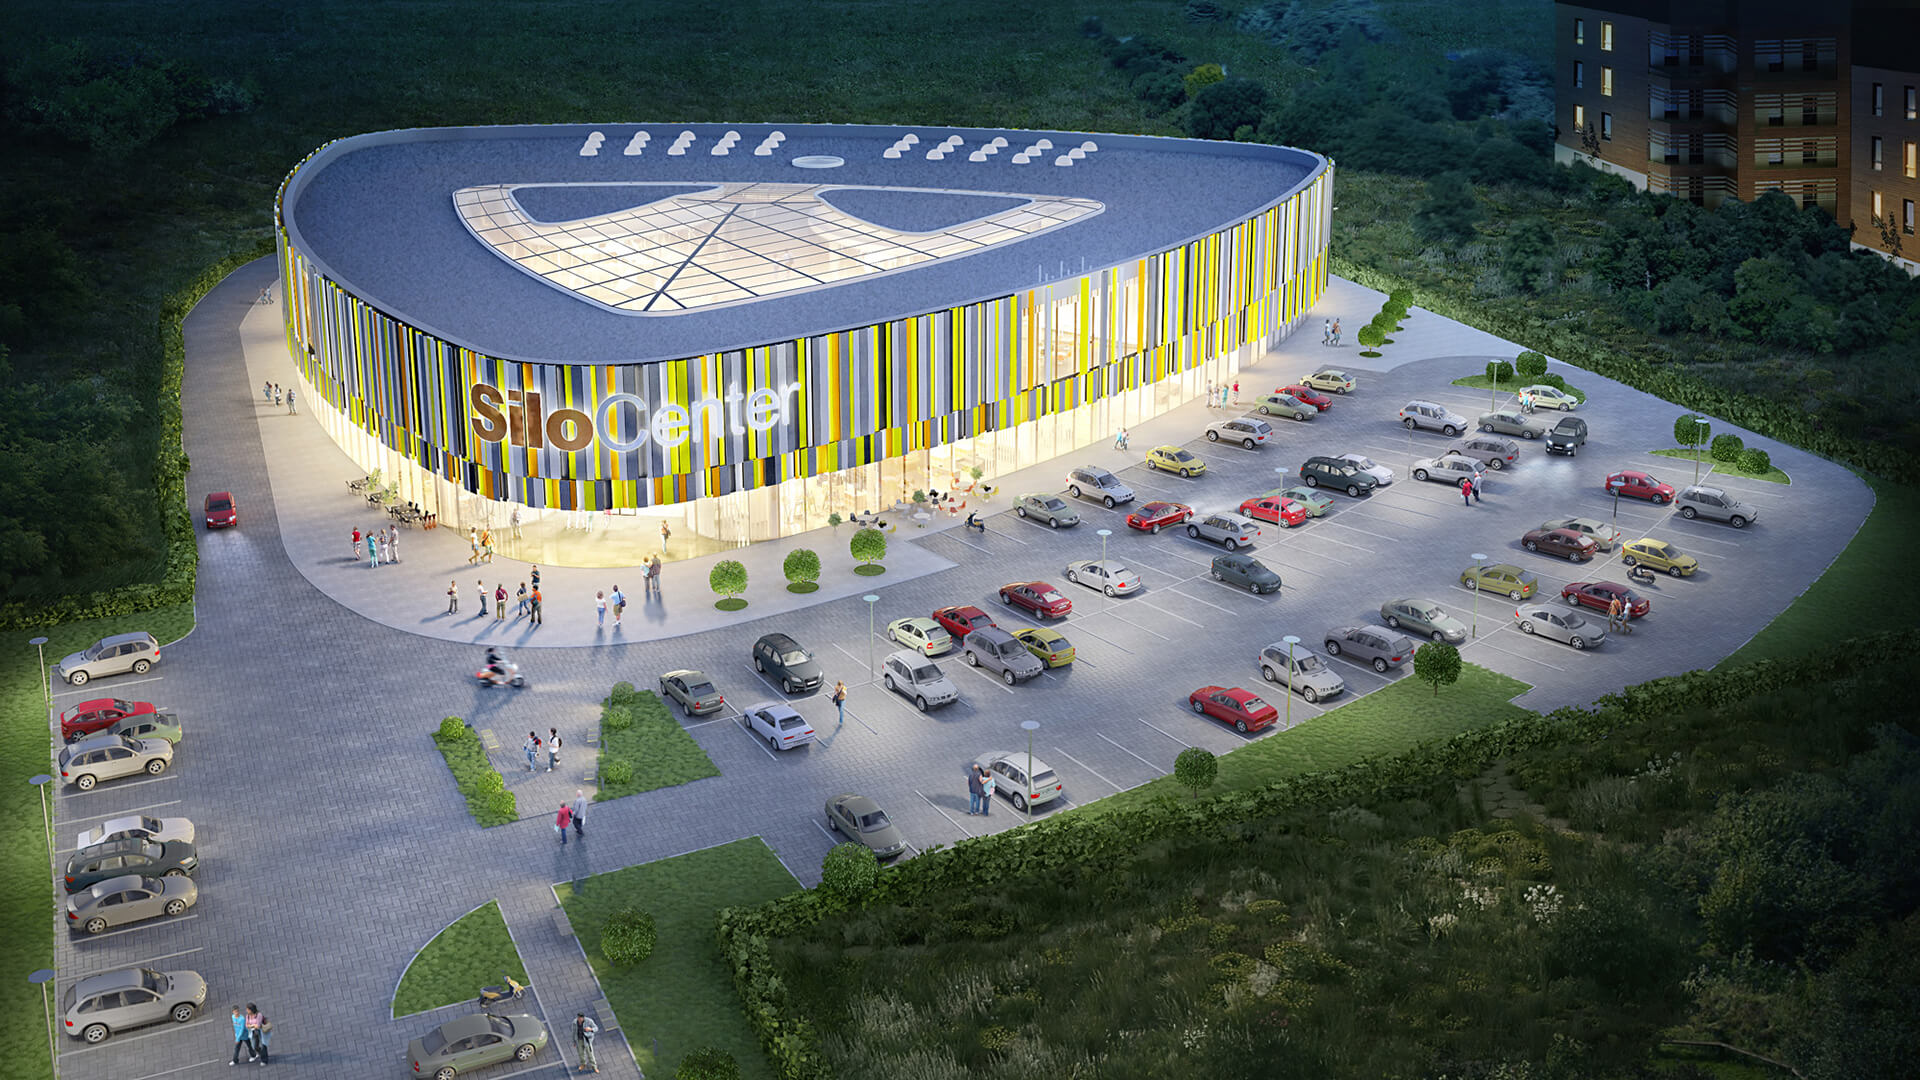 SiloCenter Centrum Sportowo - Rekreacyjne - Projekt Neostudio Architekci